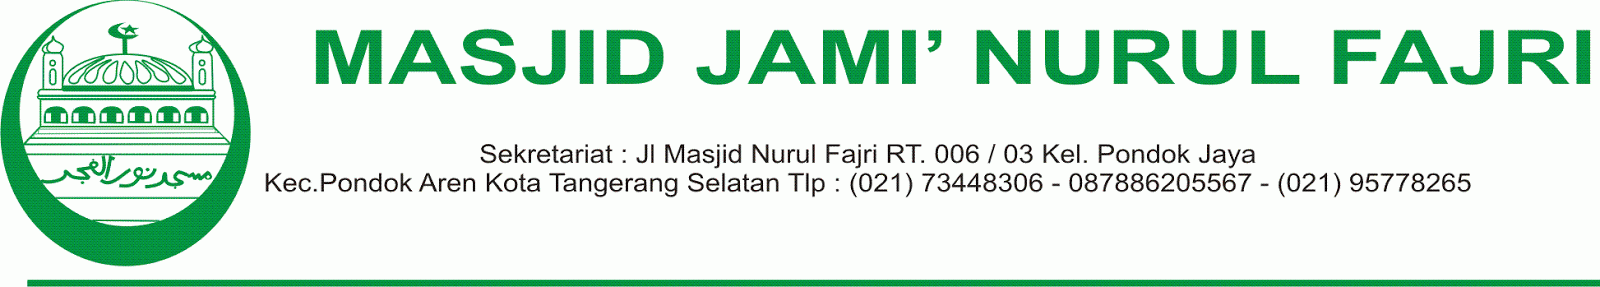 Yayasan Masjid Nurul Fajri Pondok Jaya Logo Dan Kop Surat